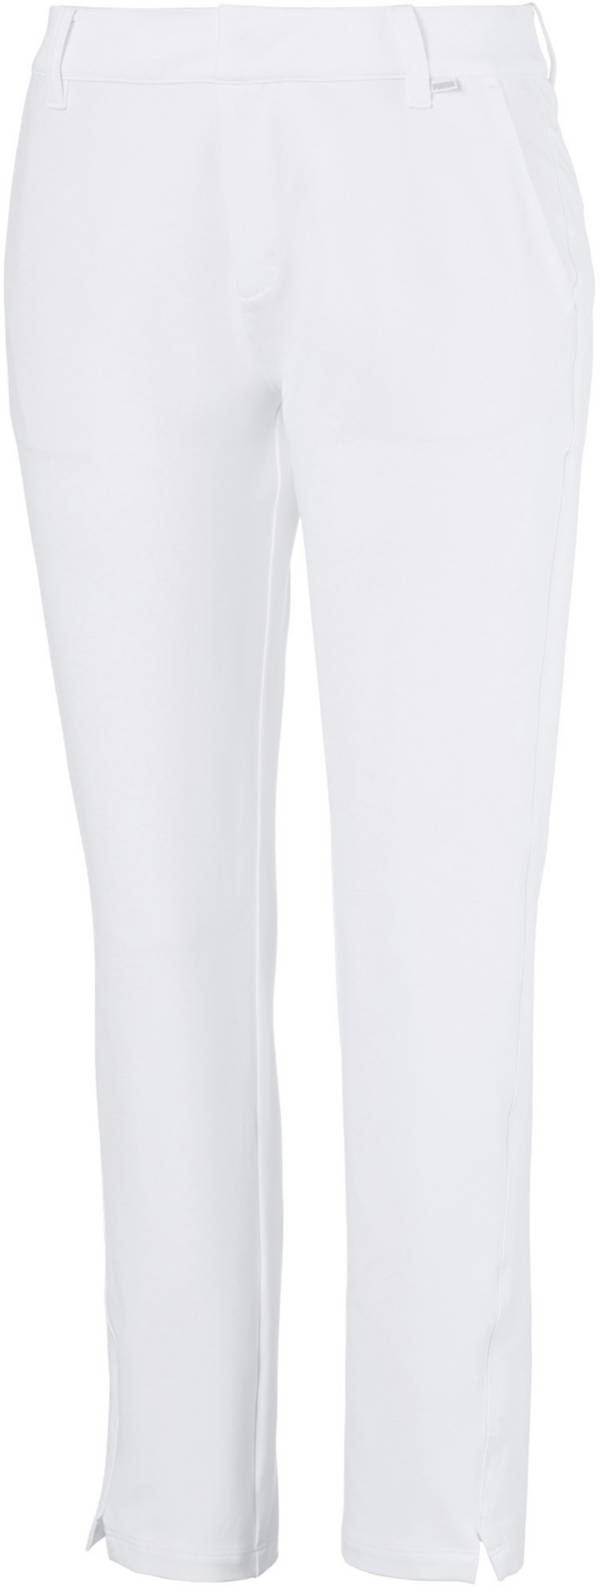 PUMA Women's 7/8 Golf Pants product image